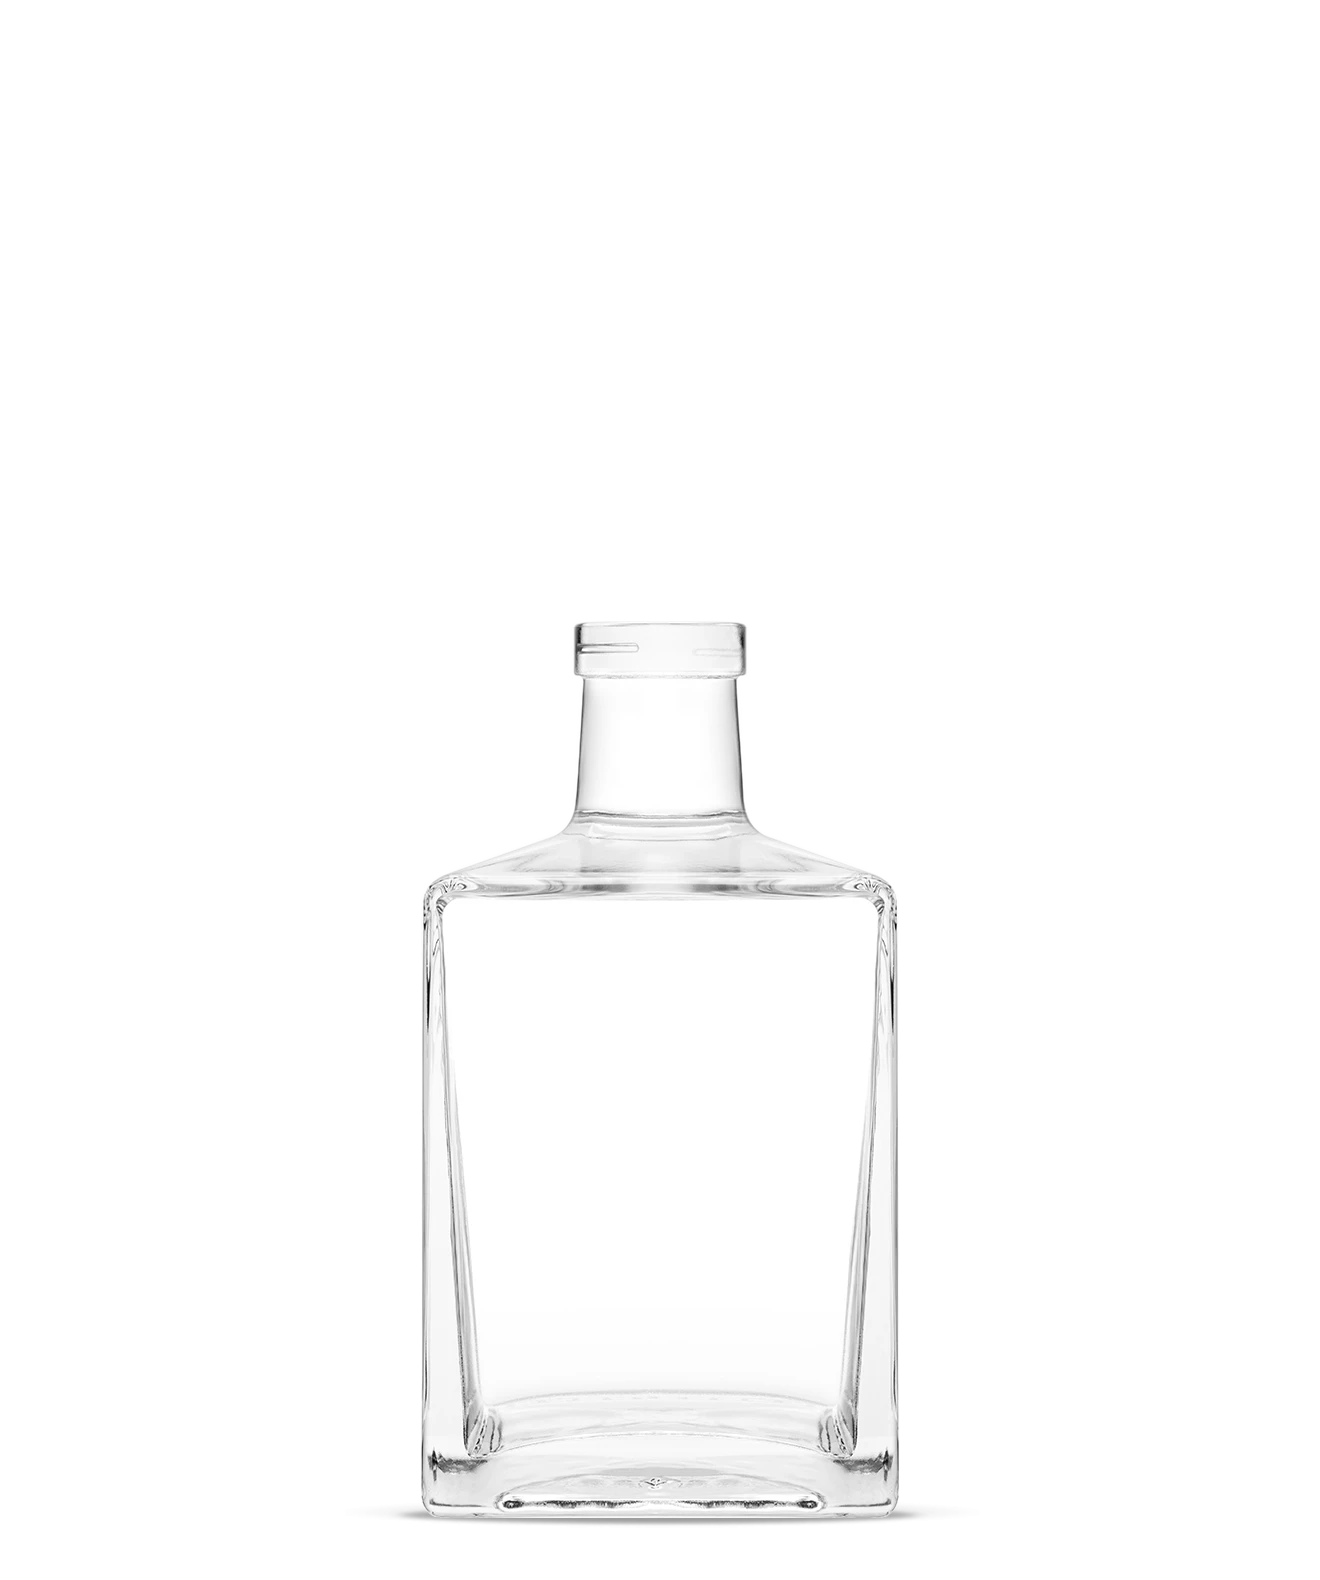 pamela-eco-fragrances-parfumsambiance-vetroelite-view